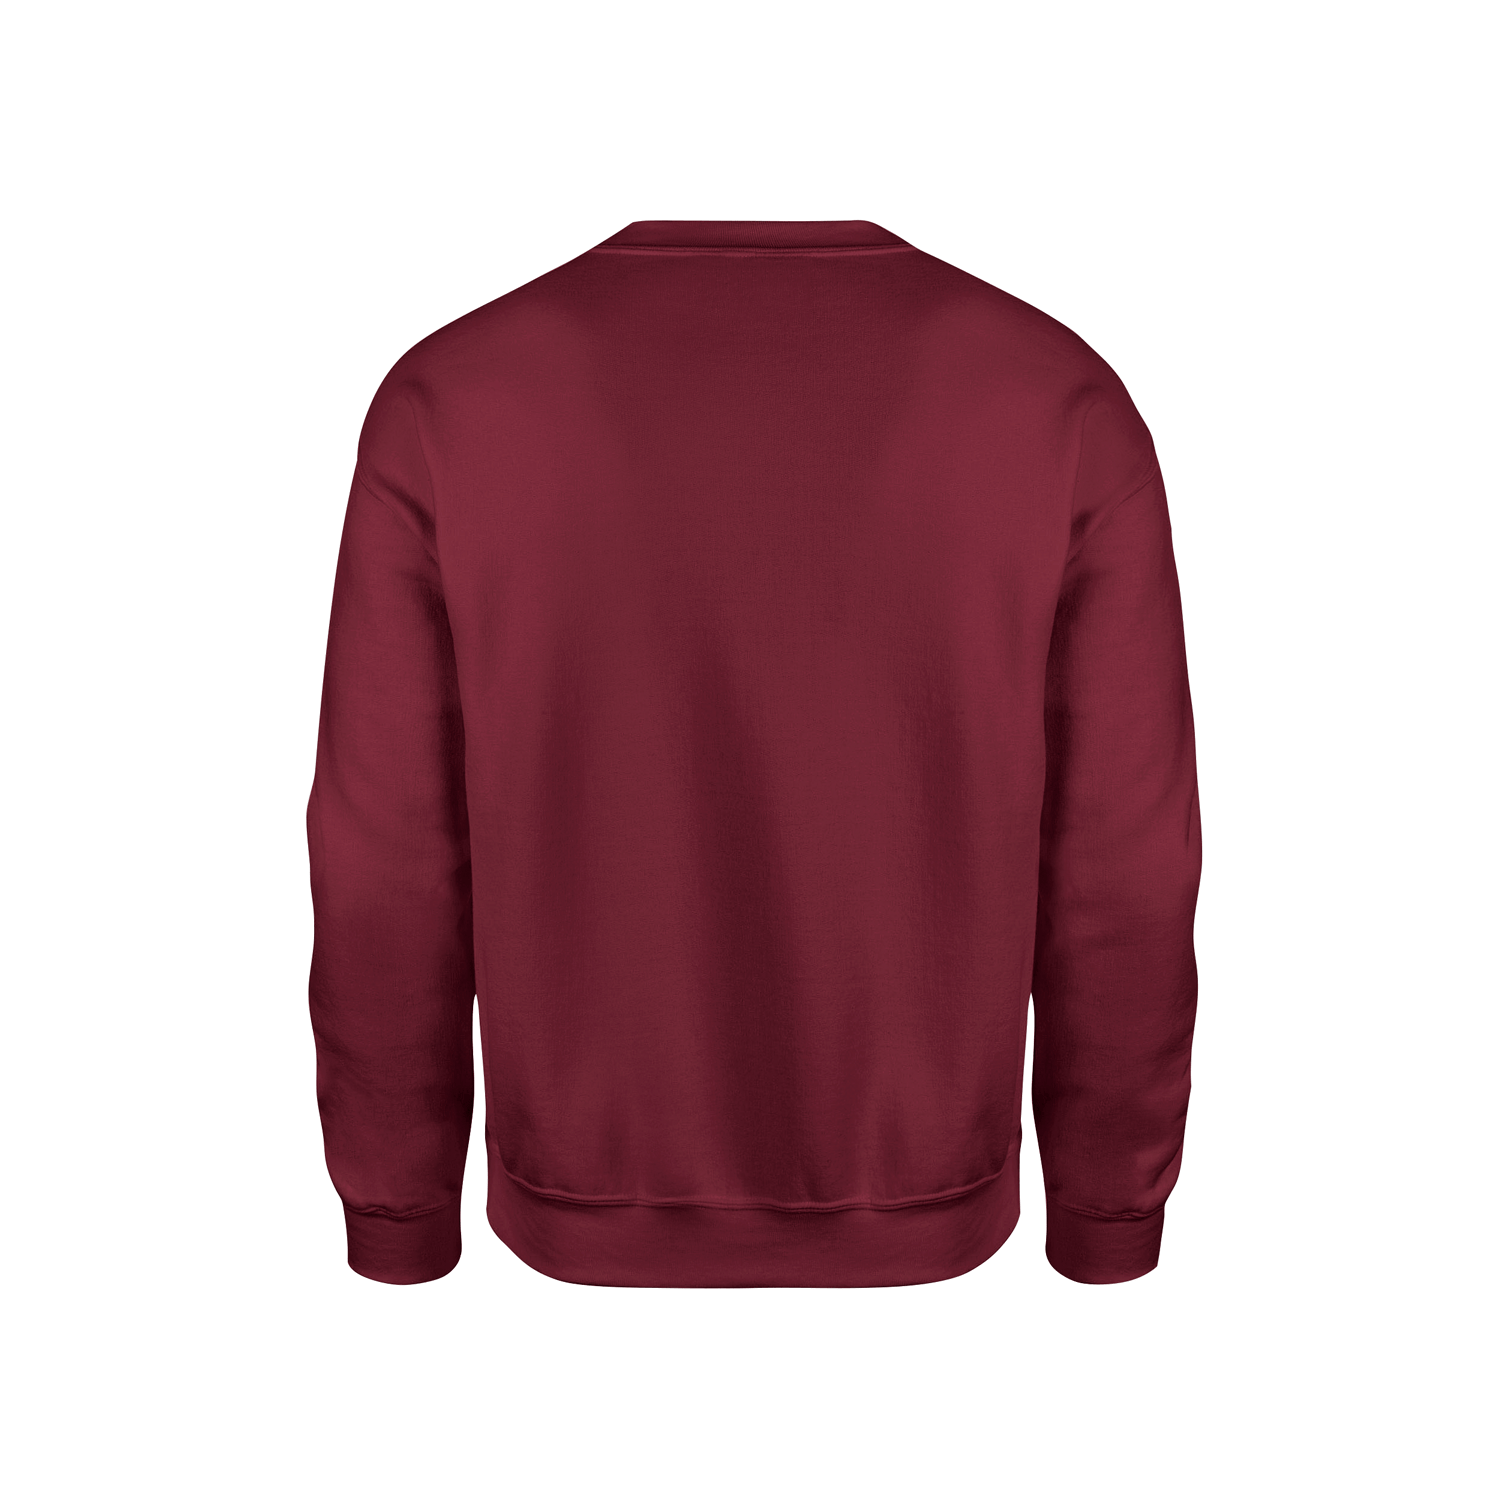 Bazarville Void SWT S Talk about it - Cranberry - Sweatshirt